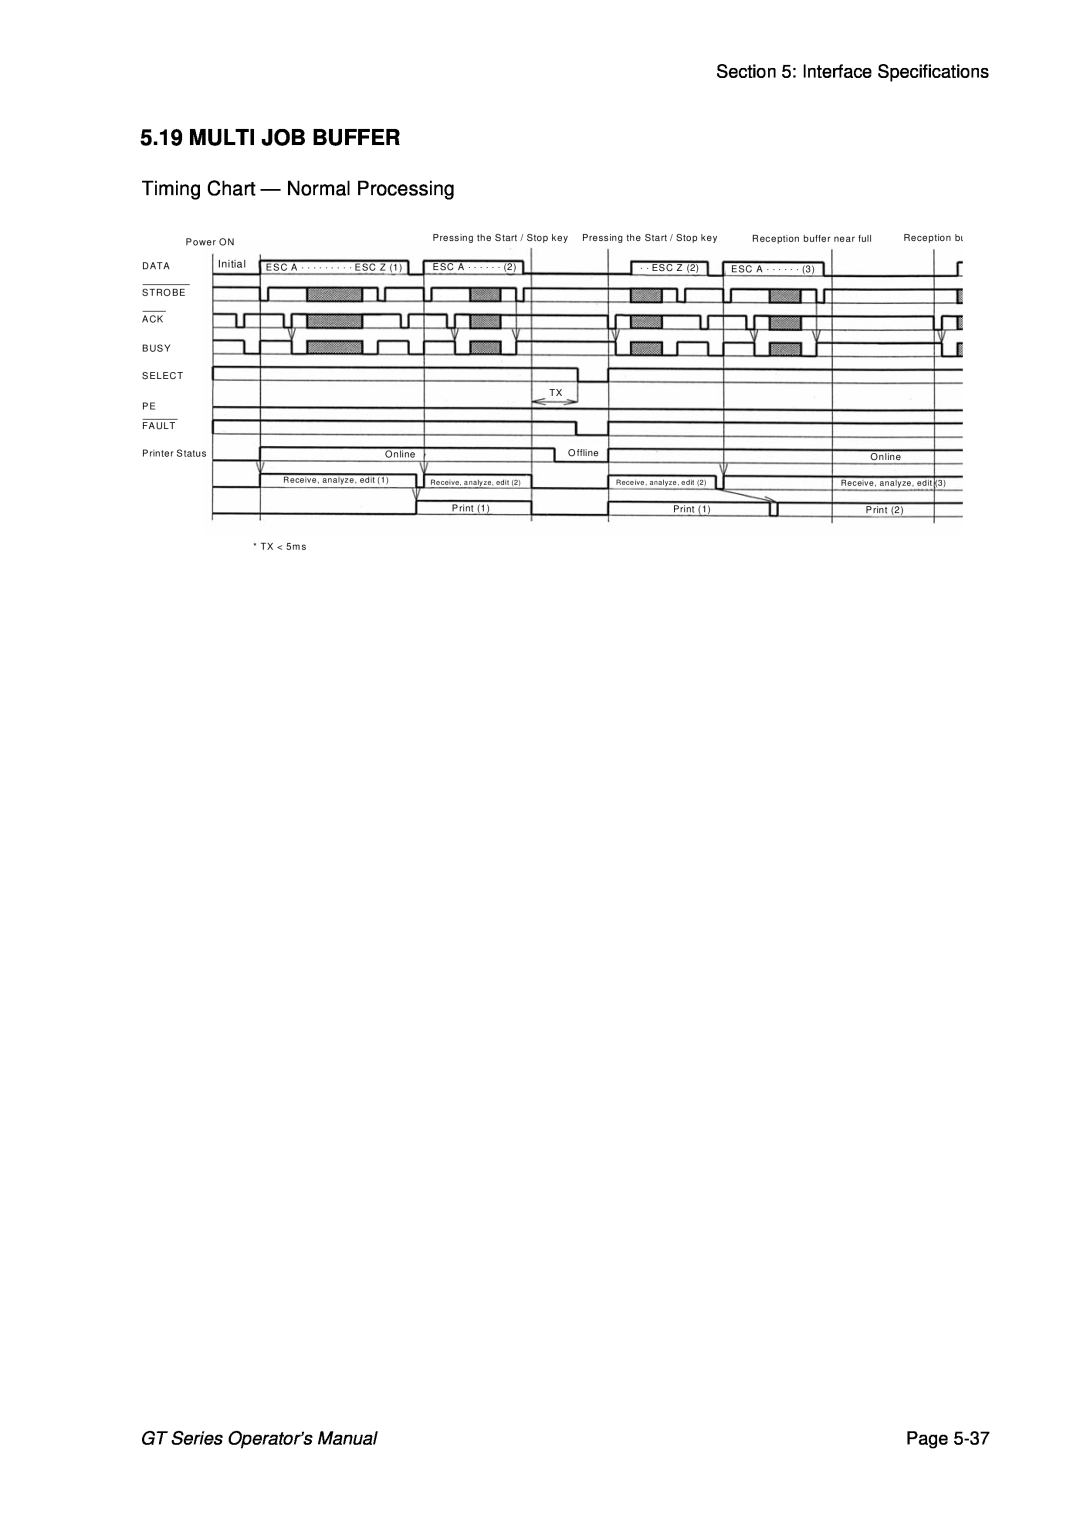 SATO GT424 manual Multi Job Buffer, GT Series Operator’s Manual, Page, DATA Initia l 